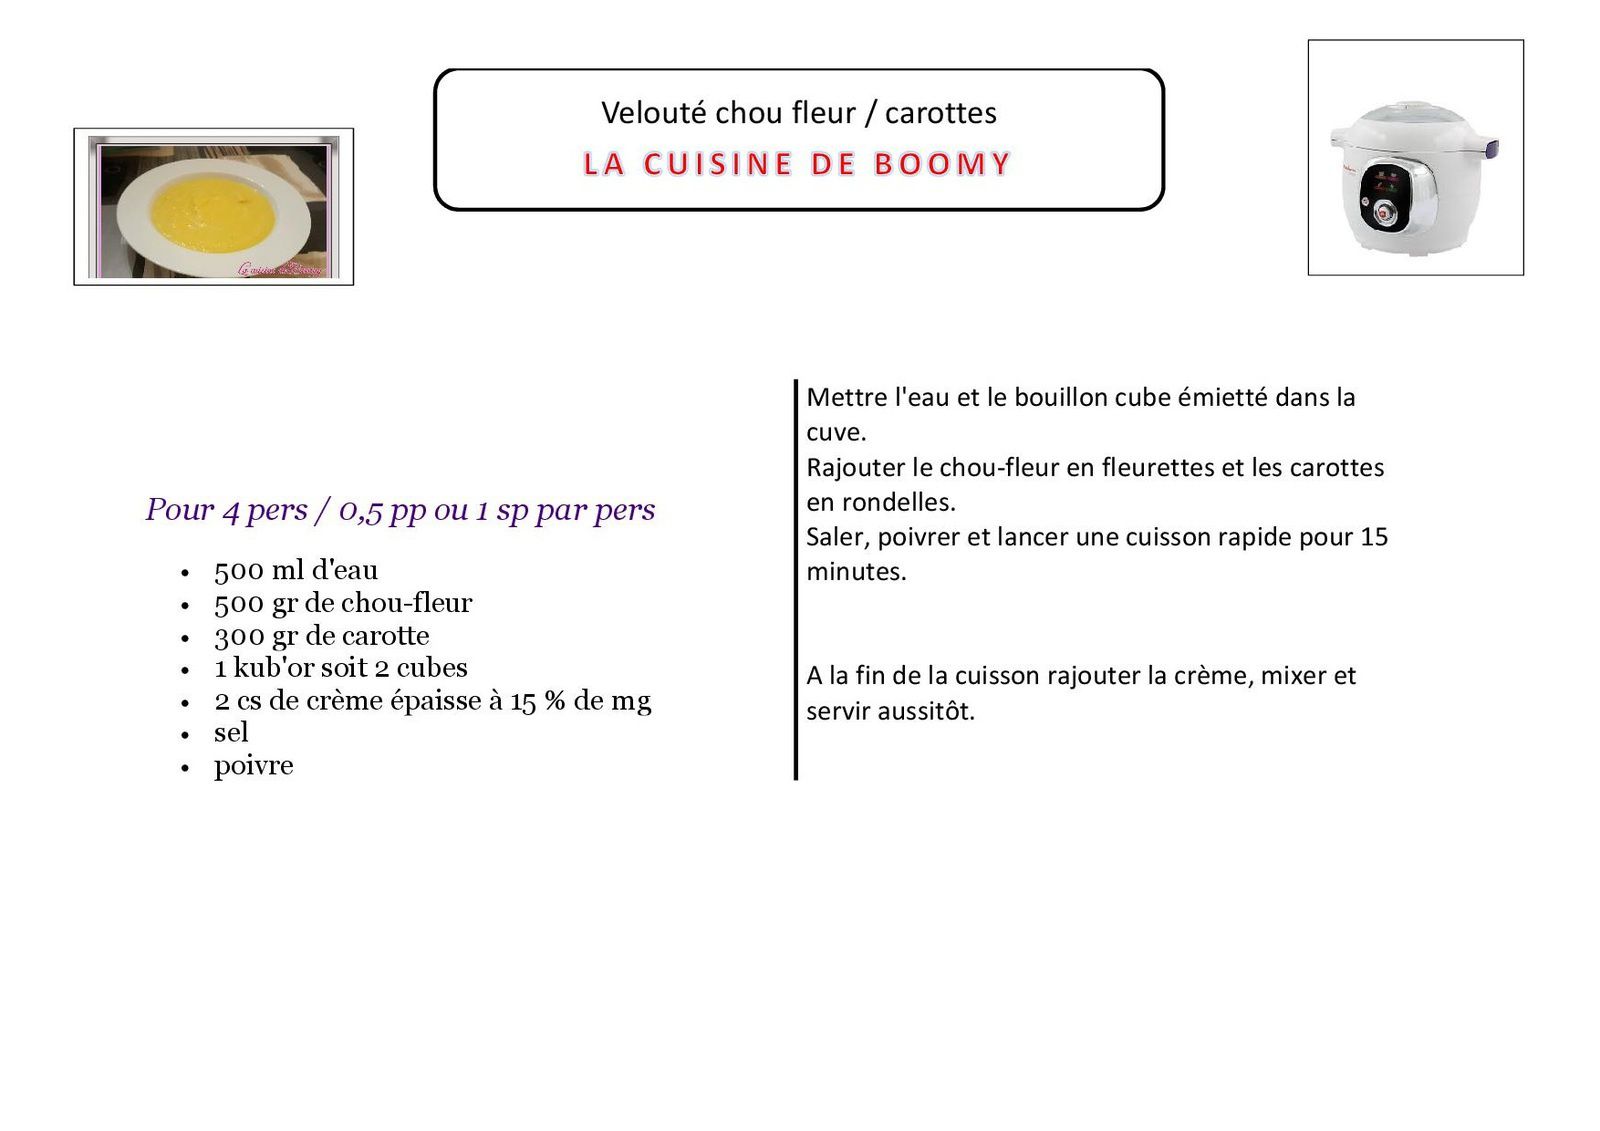 Velouté chou-fleur / carottes (Cookeo)